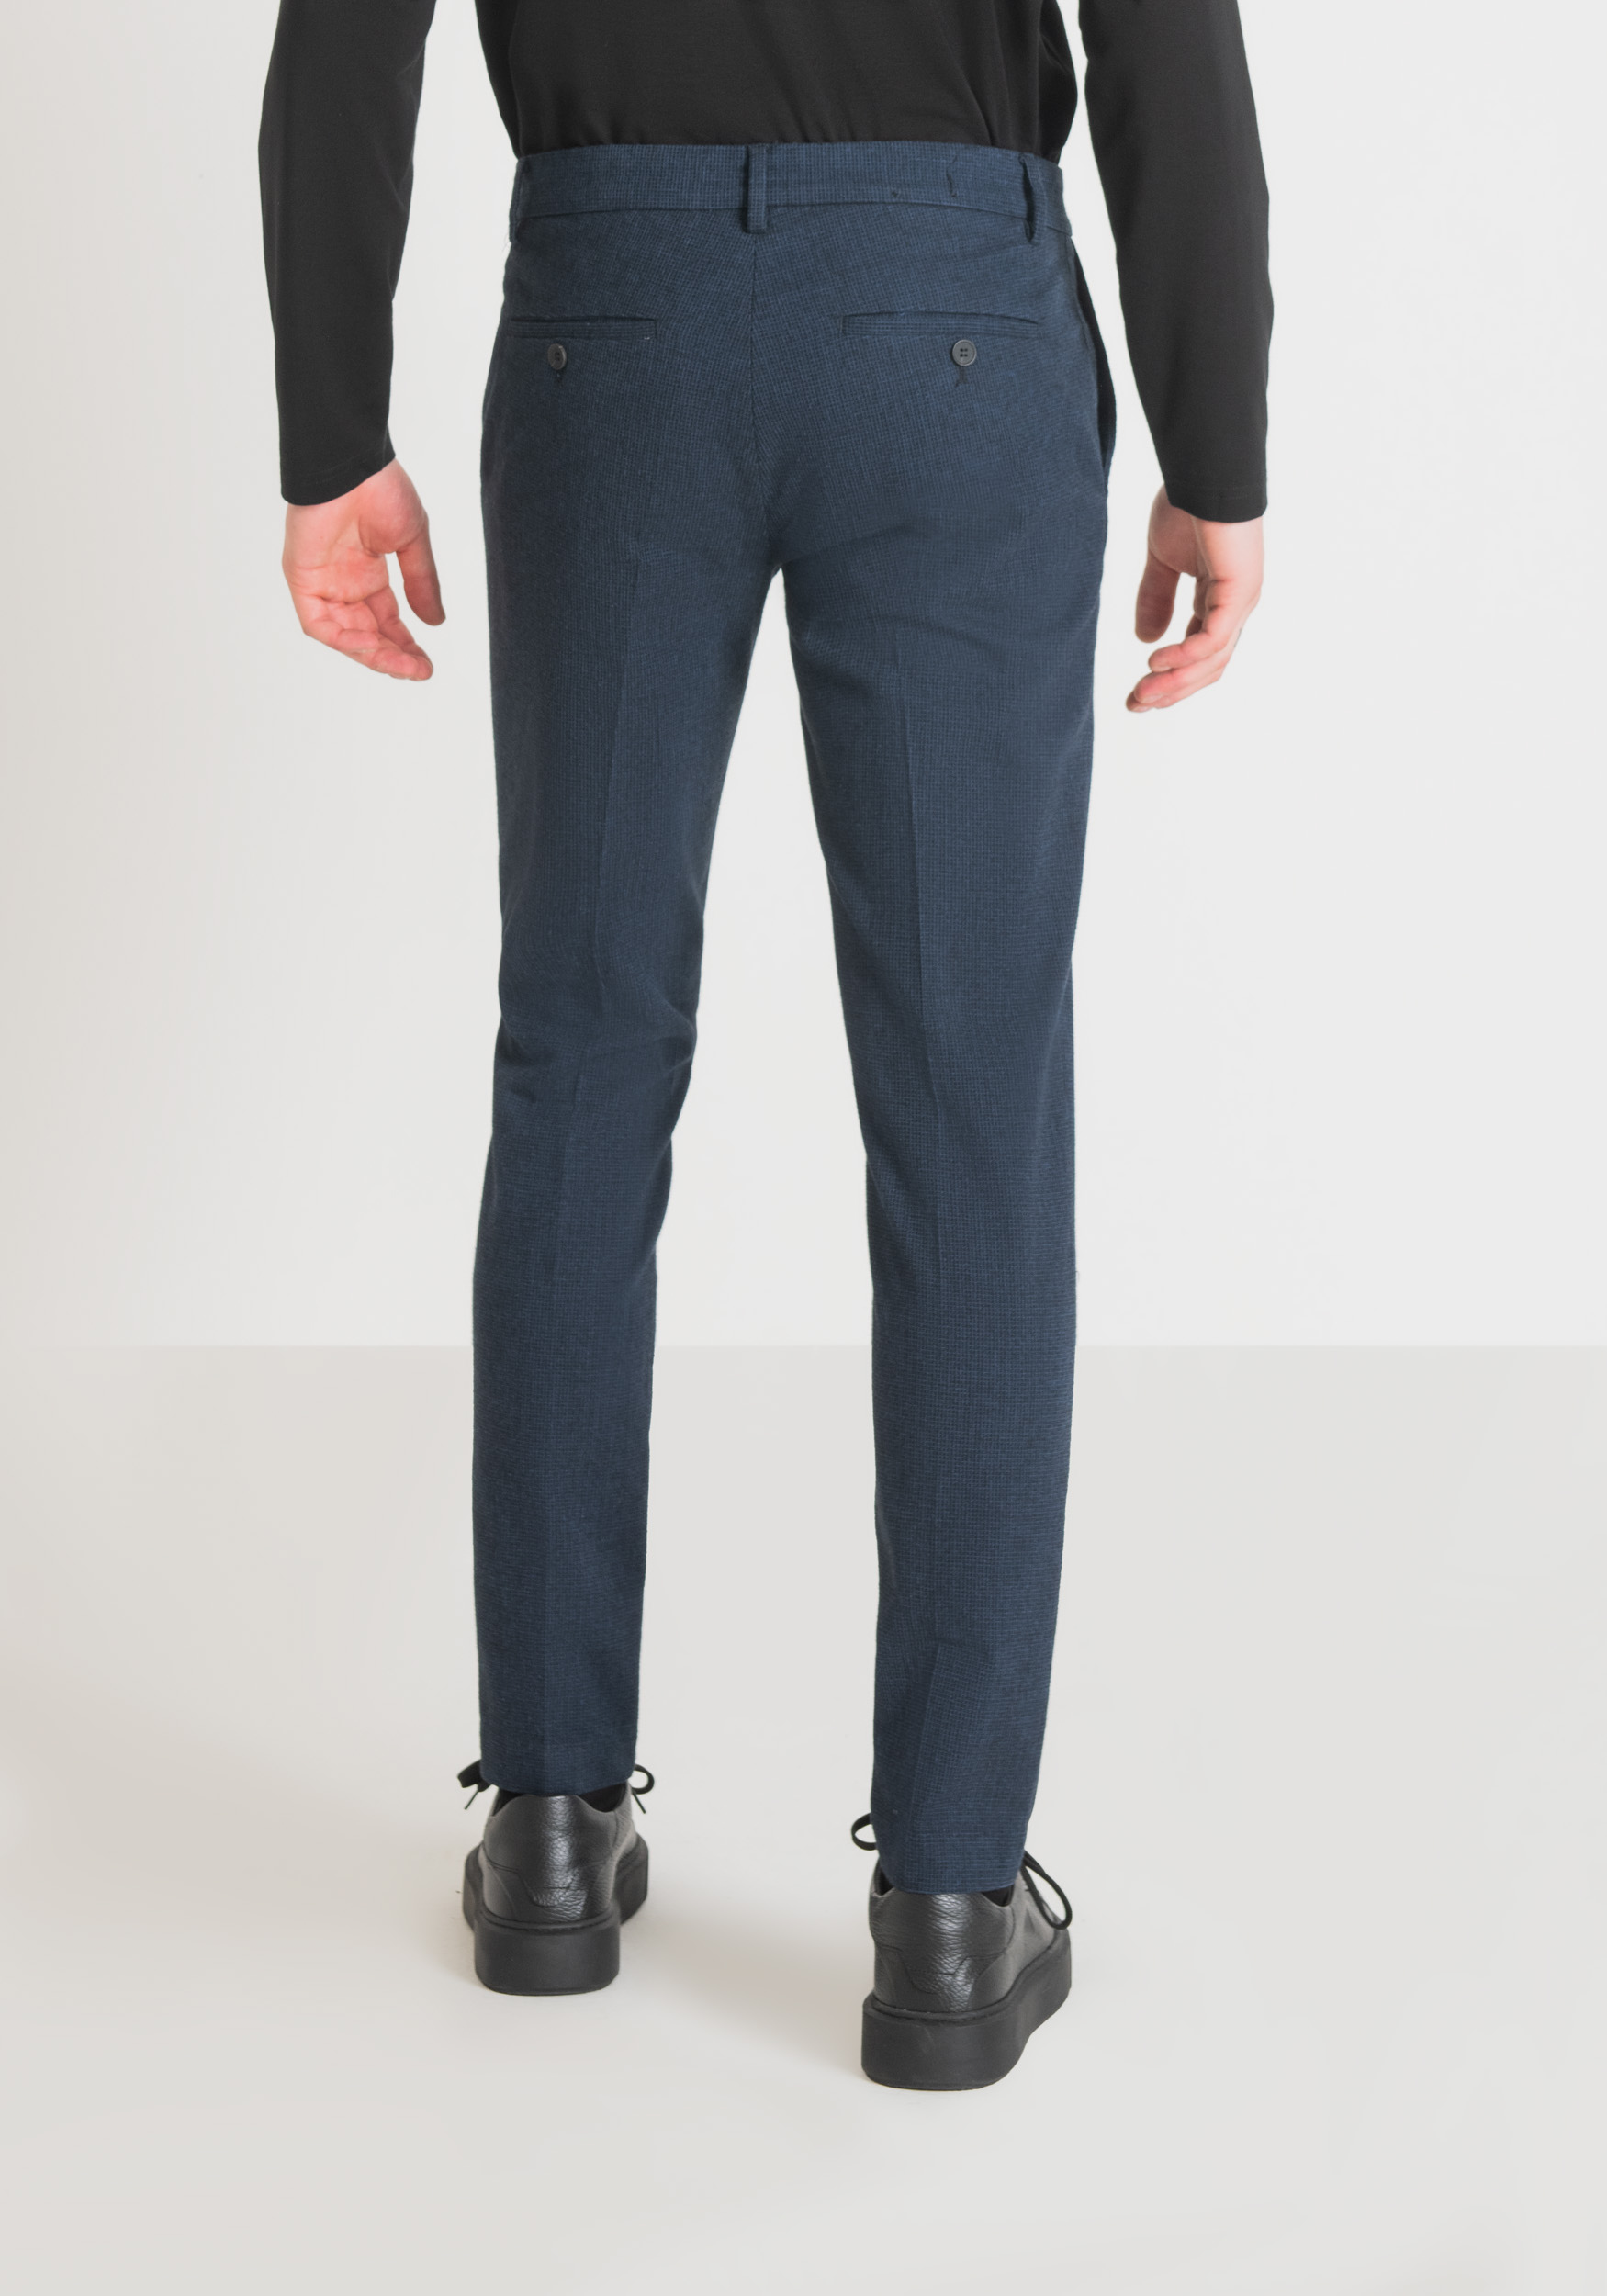 Antony Morato Pantalon Skinny Fit Bryan En Coton Melange Armure Elastique Encre Bleu | Homme Pantalons